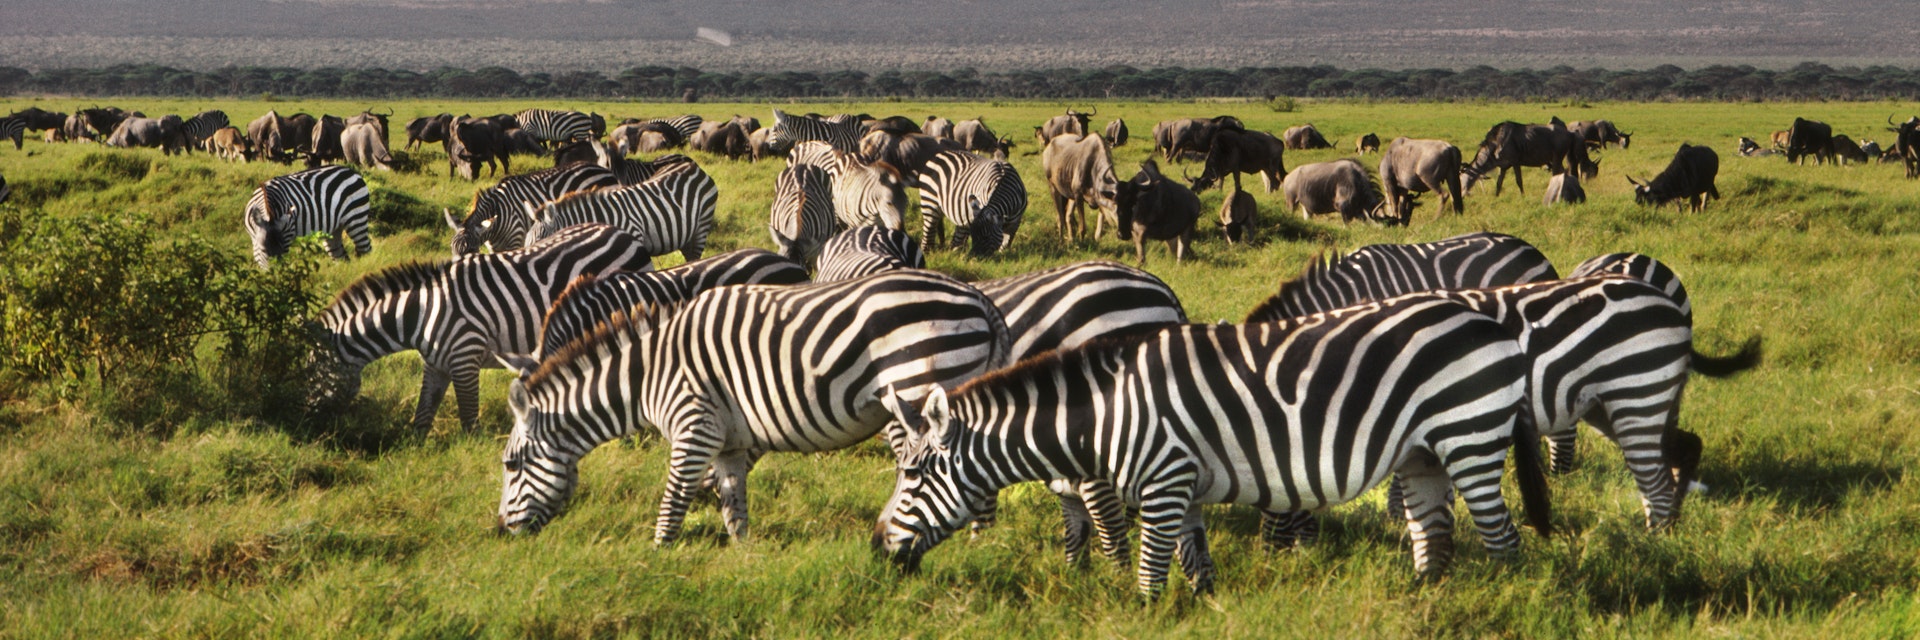 Zebras and wildebeests grazing, Amboseli National Park, Kenya